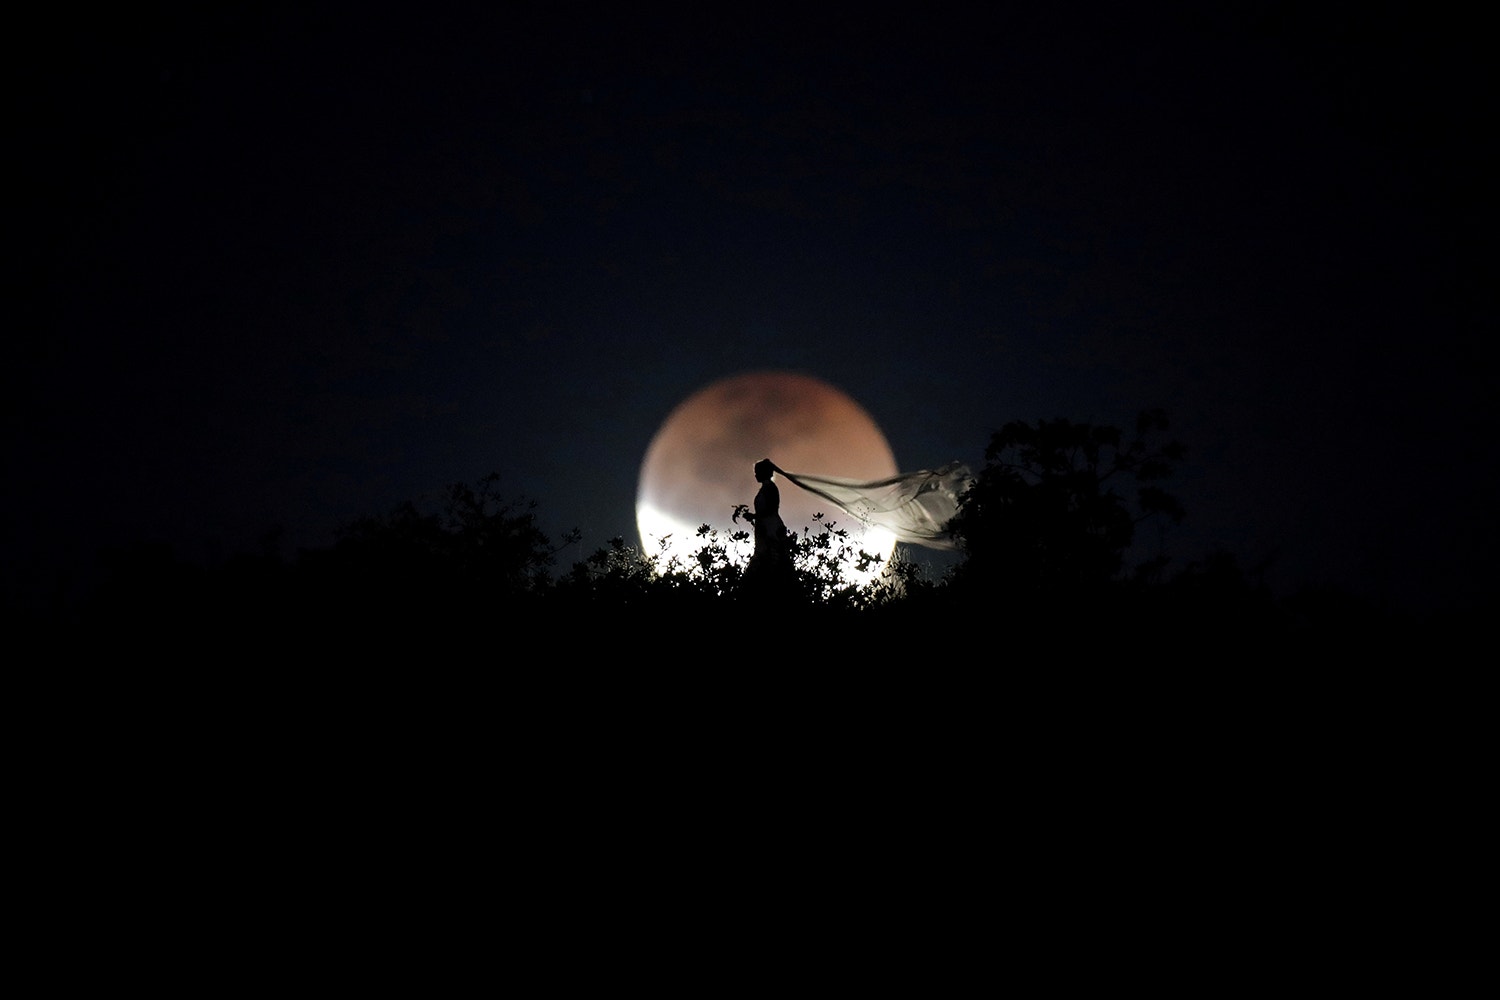  Uma noiva posa durante eclipse lunar /Ueslei Marcelino - Reuters 